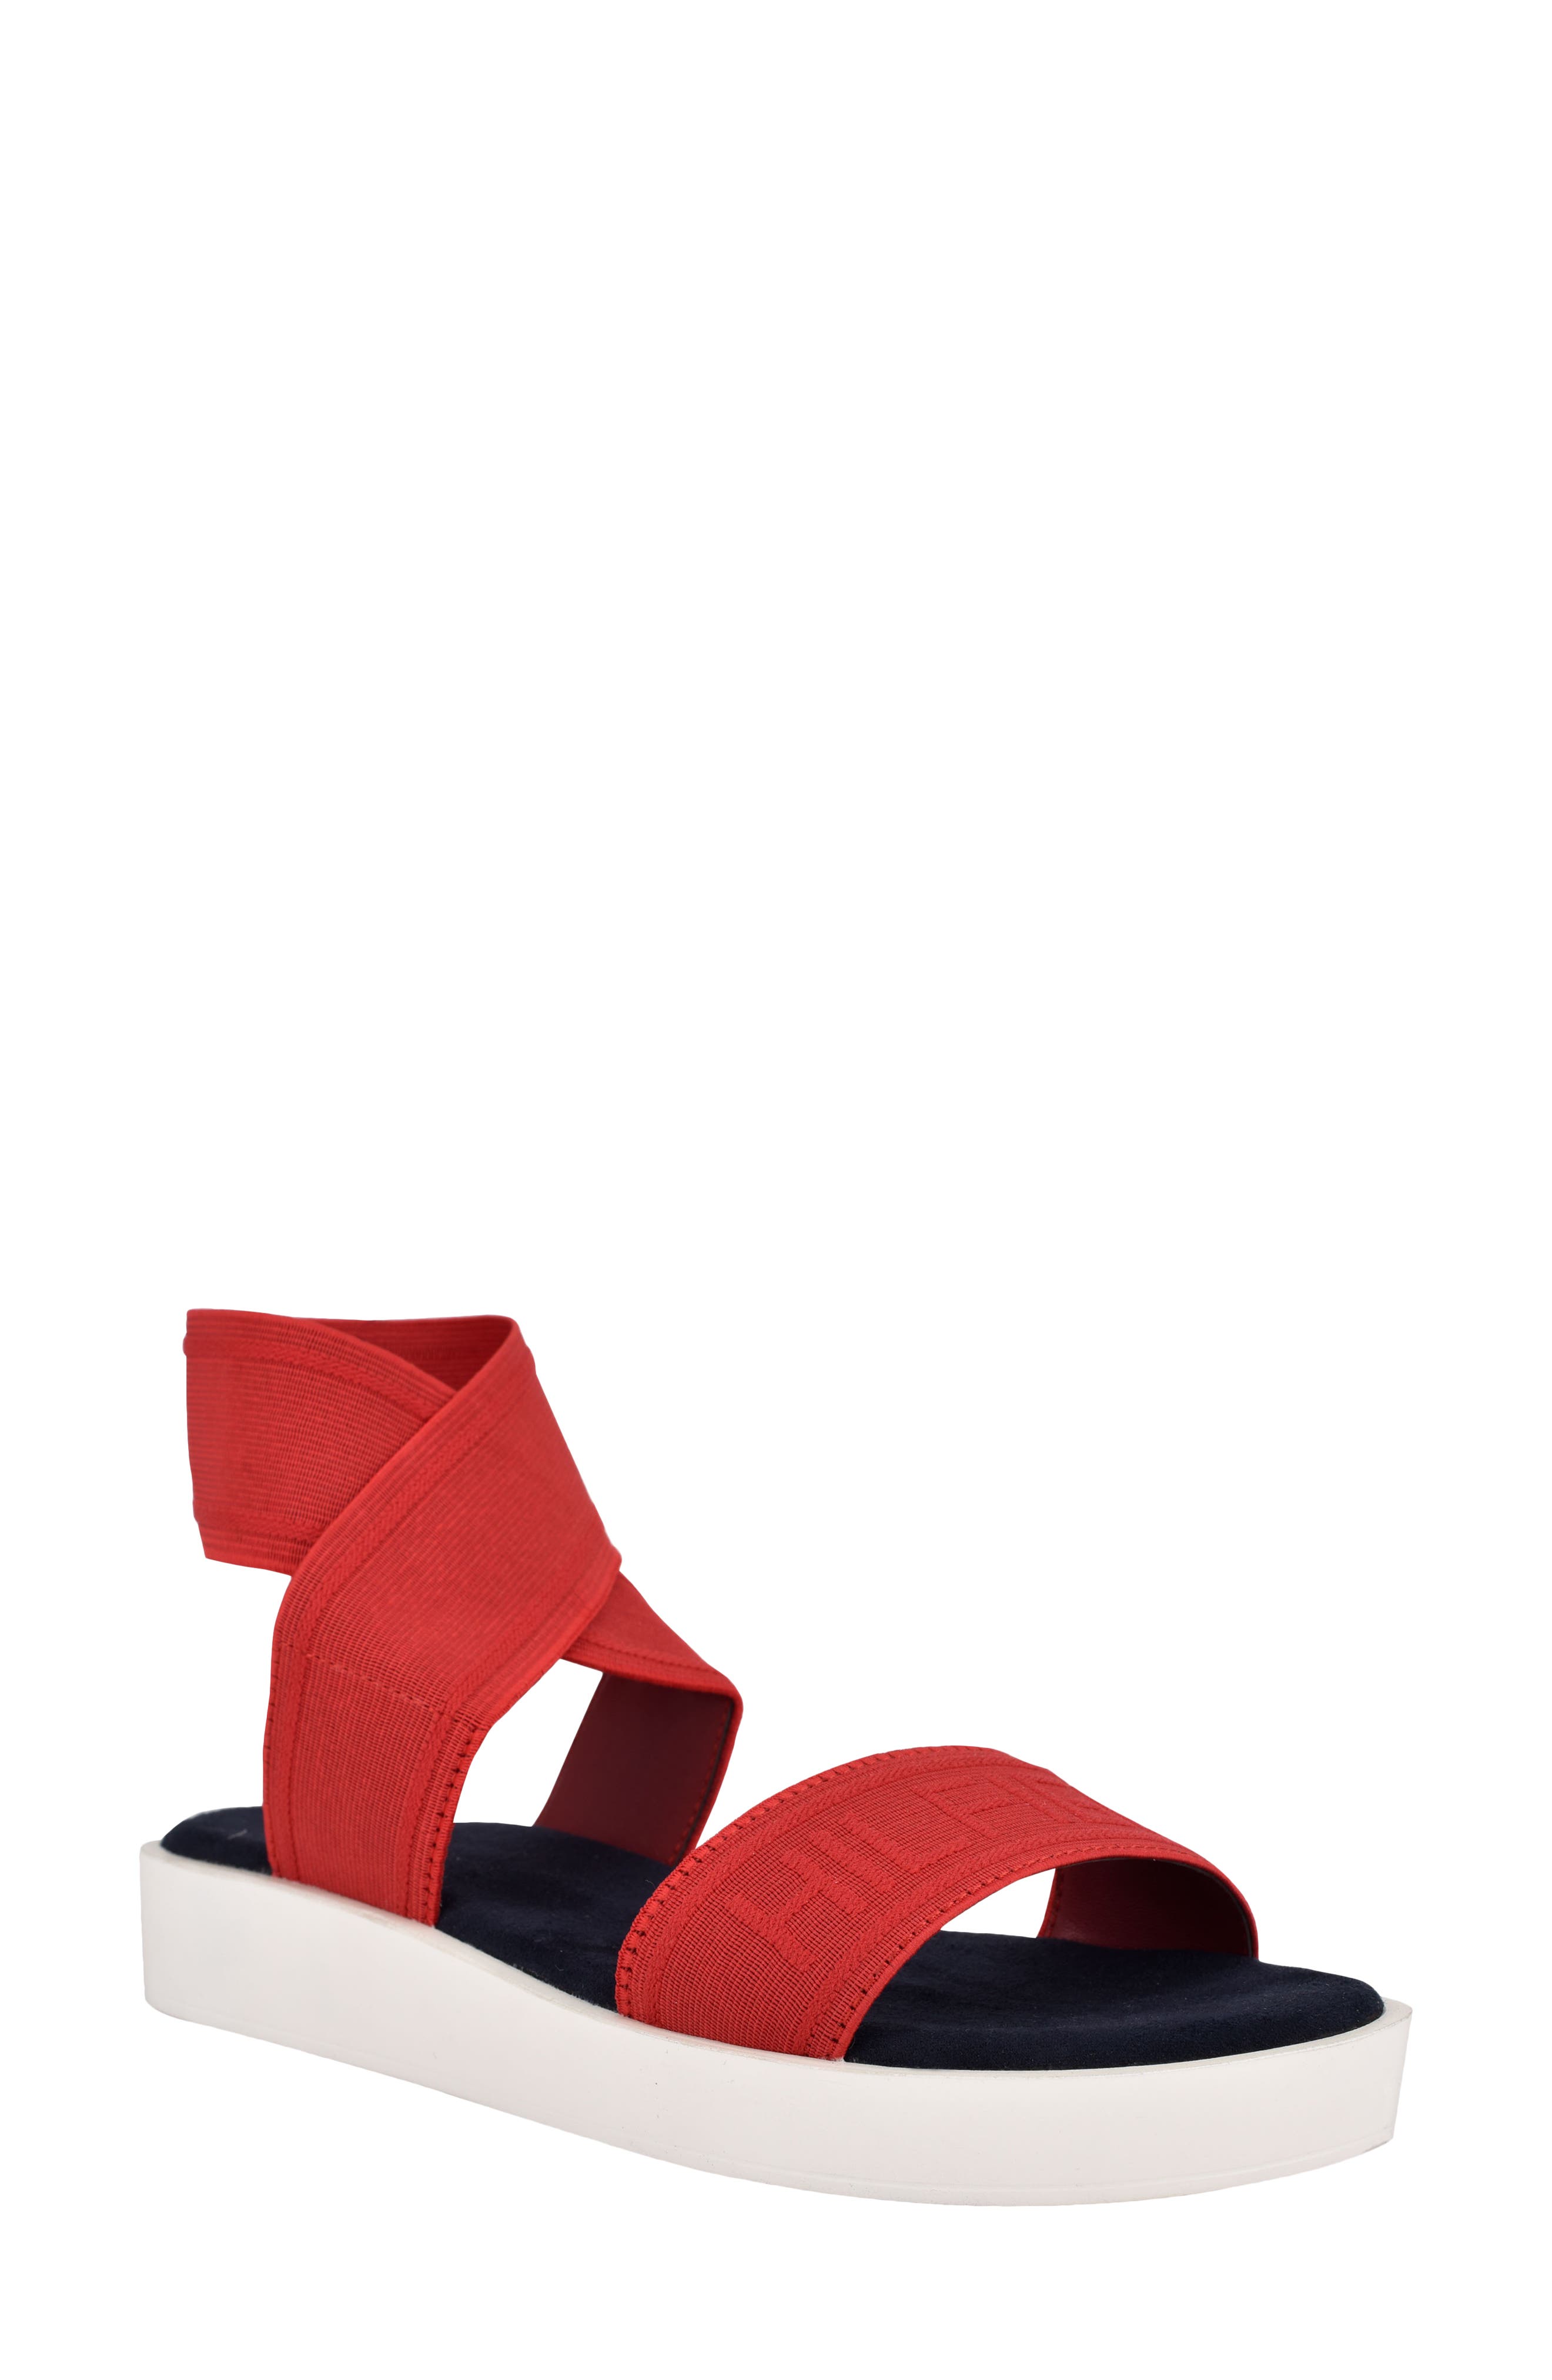 UPC 195182659457 product image for Women's Tommy Hilfiger Springi Ankle Strap Sandal, Size 6.5 M - Red | upcitemdb.com